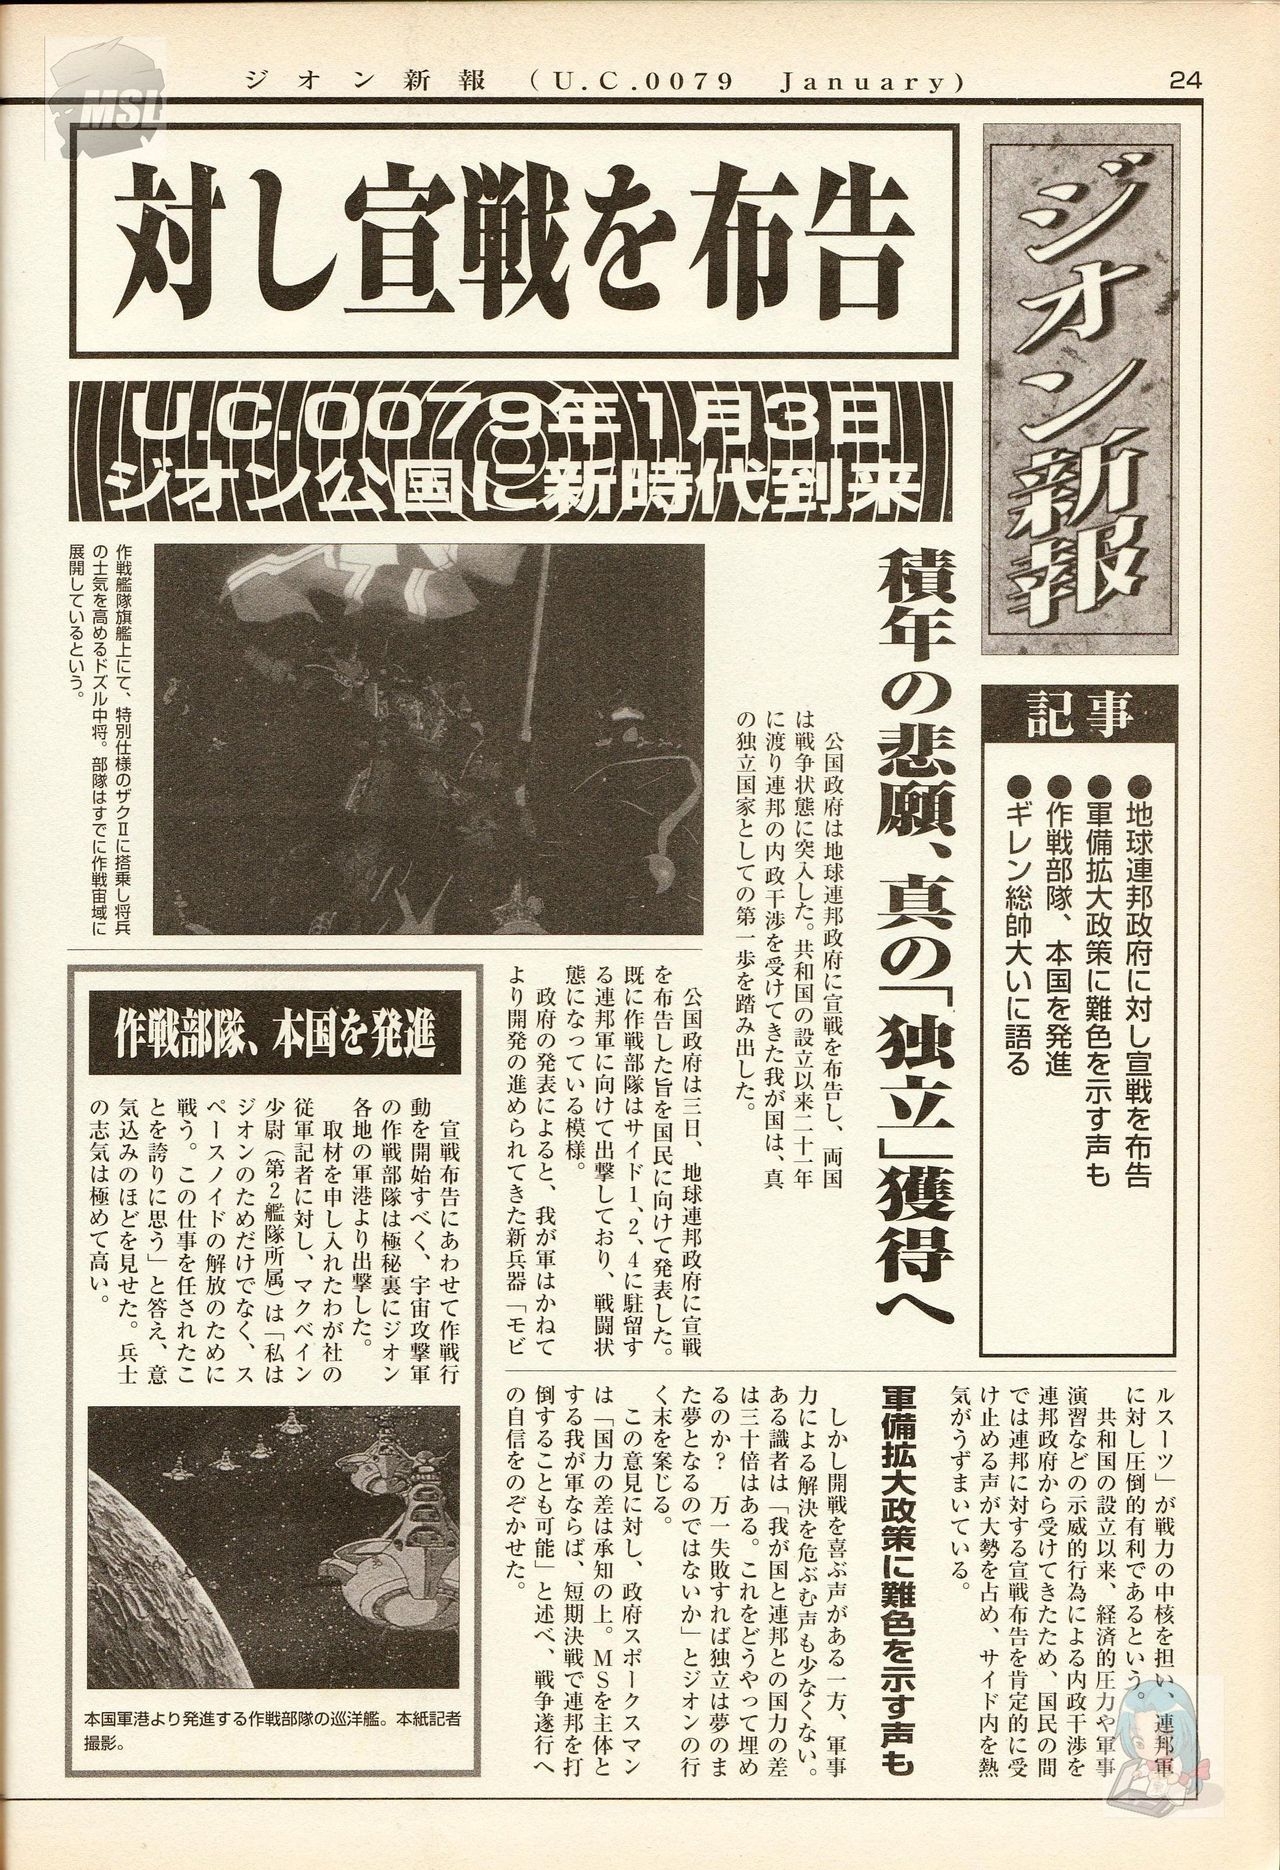 Mobile Suit Gundam - Zeon - Classified Records 27